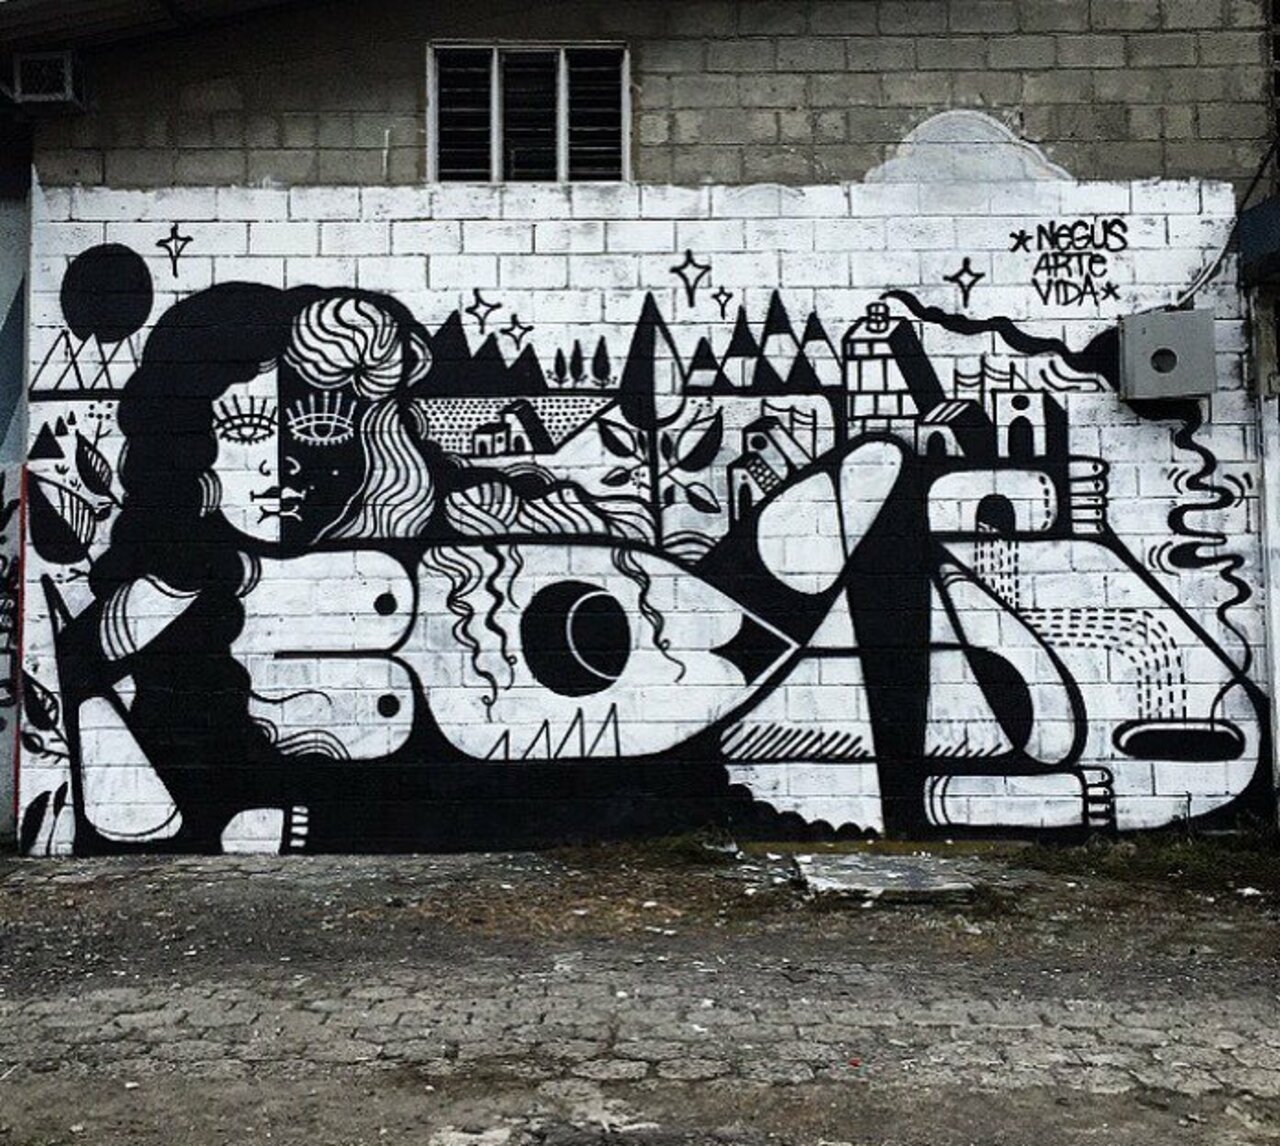 Love this piece by @negus_artevida in #SanJose #CostaRica -- http://globalstreetart.com/negus-arte-vida -- #liveart #streetart #paint… https://t.co/NyxnnhittR